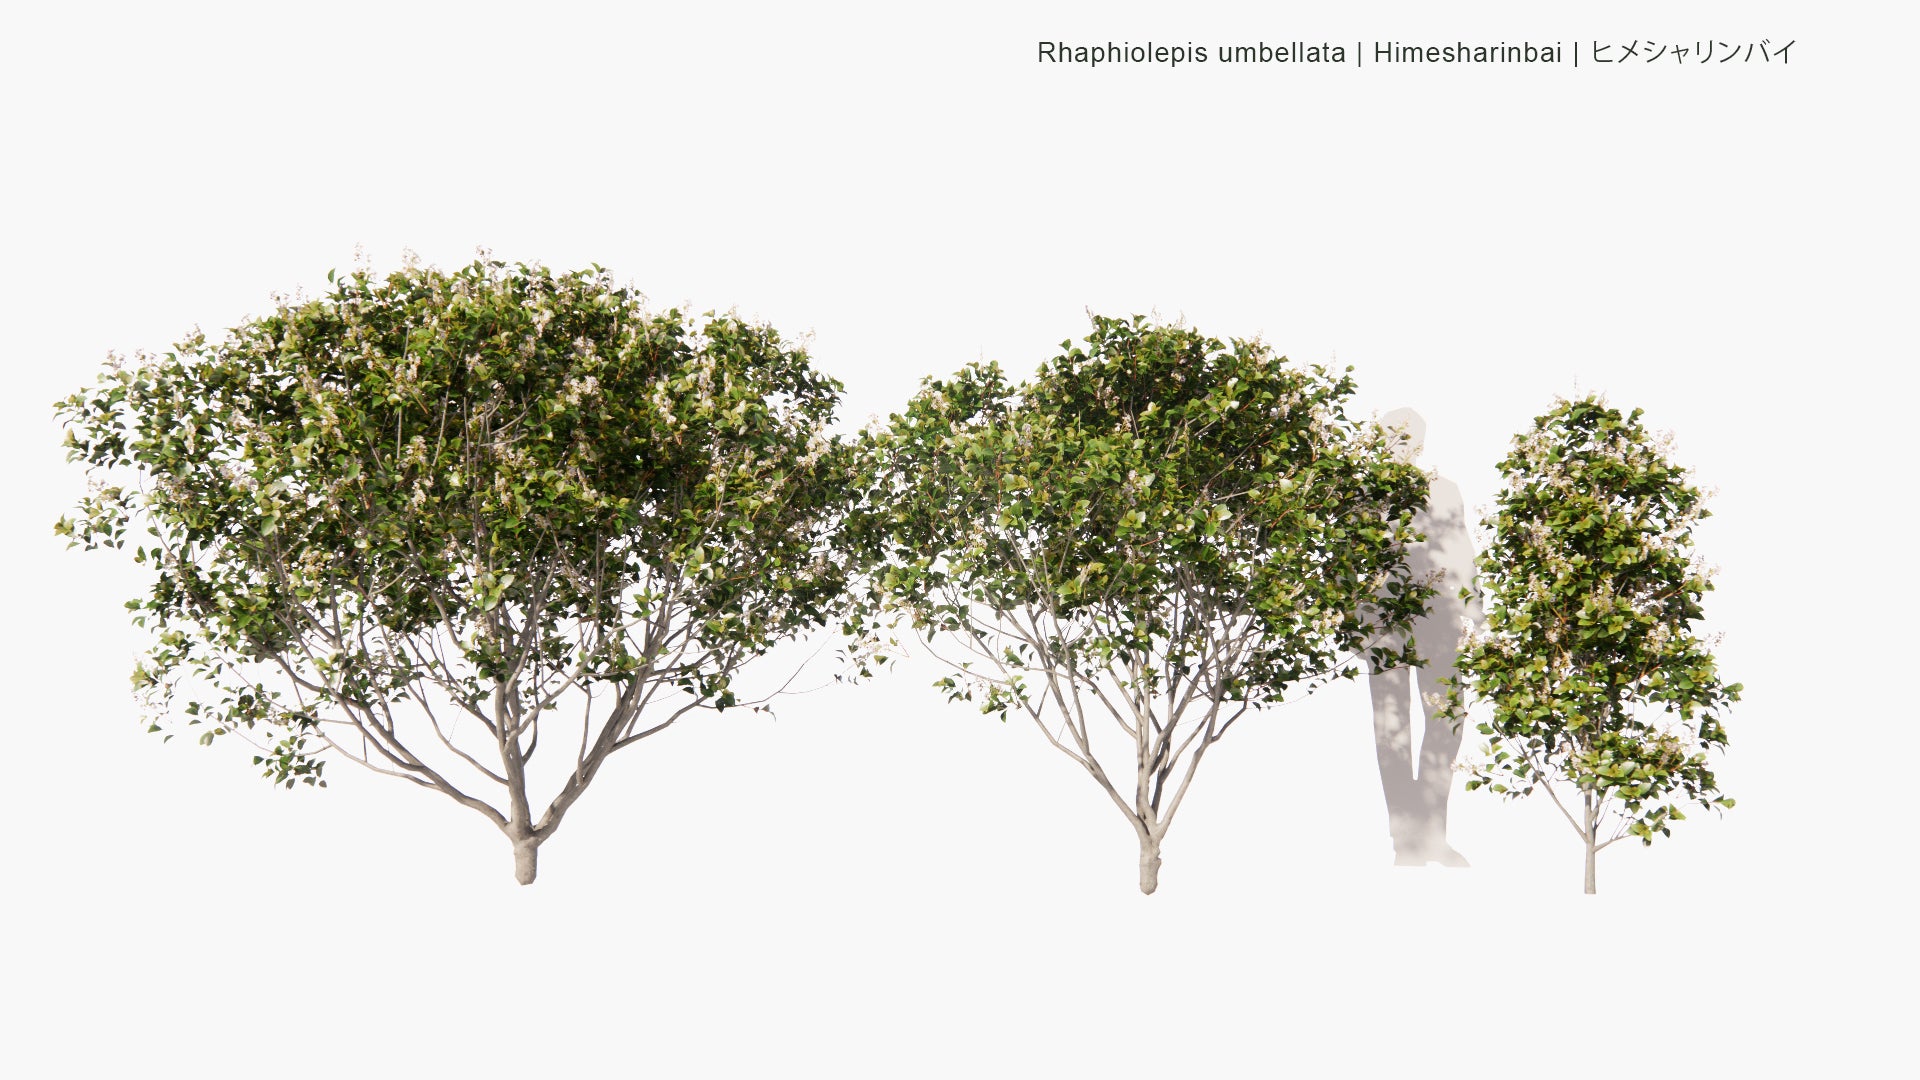 Low Poly Rhaphiolepis Umbellata - Himesharinbai, ヒメシャリンバイ (3D Model)